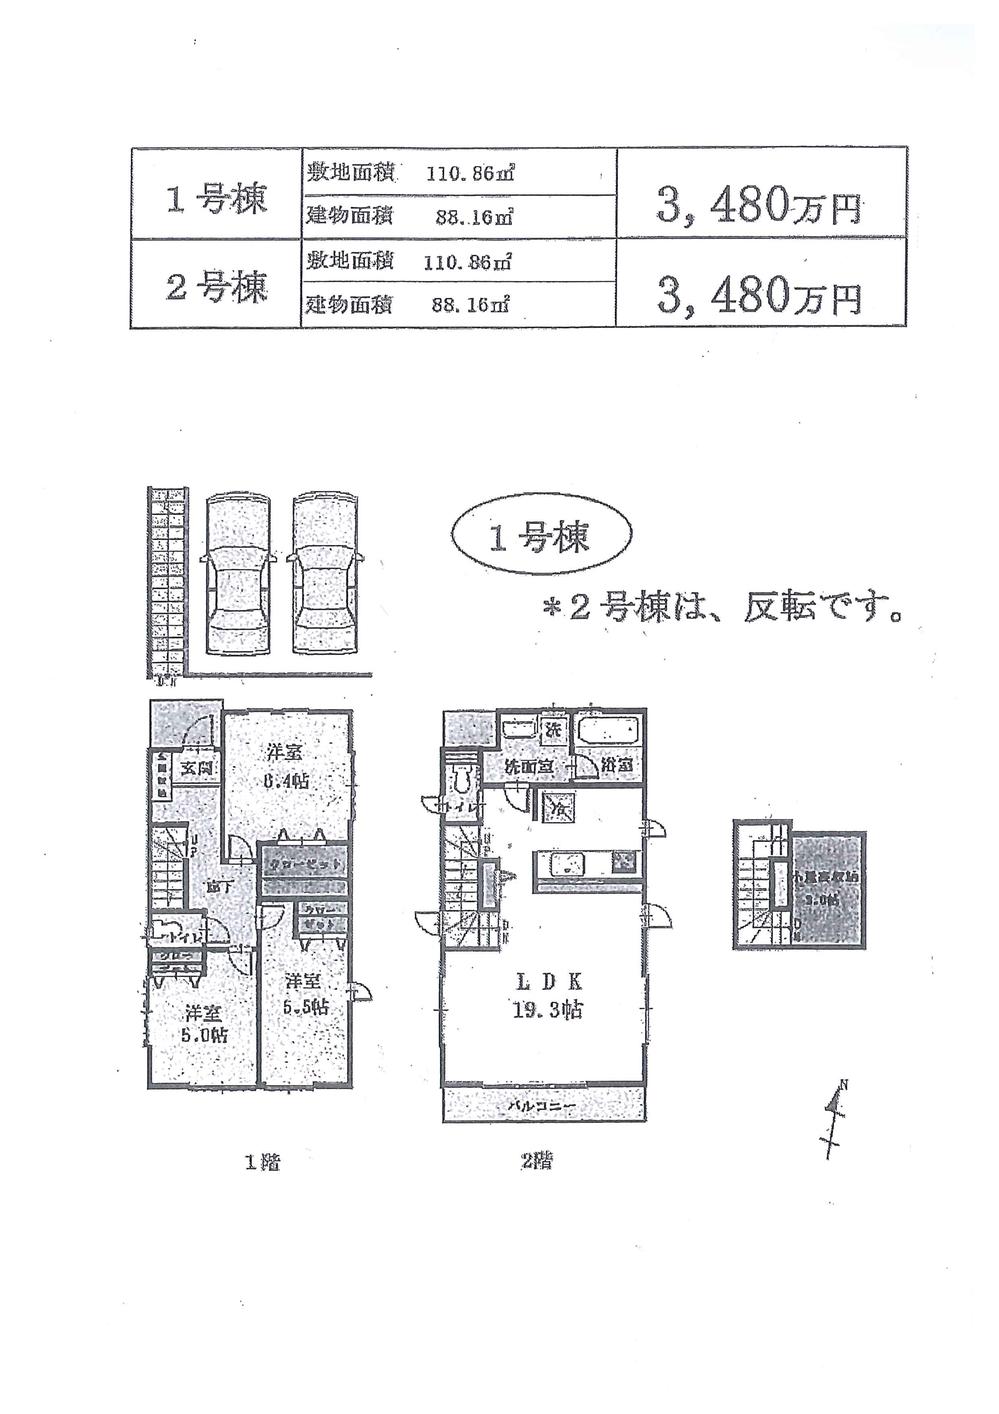 Floor plan. 34,800,000 yen, 4LDK, Land area 110.86 sq m , Building area 88.18 sq m